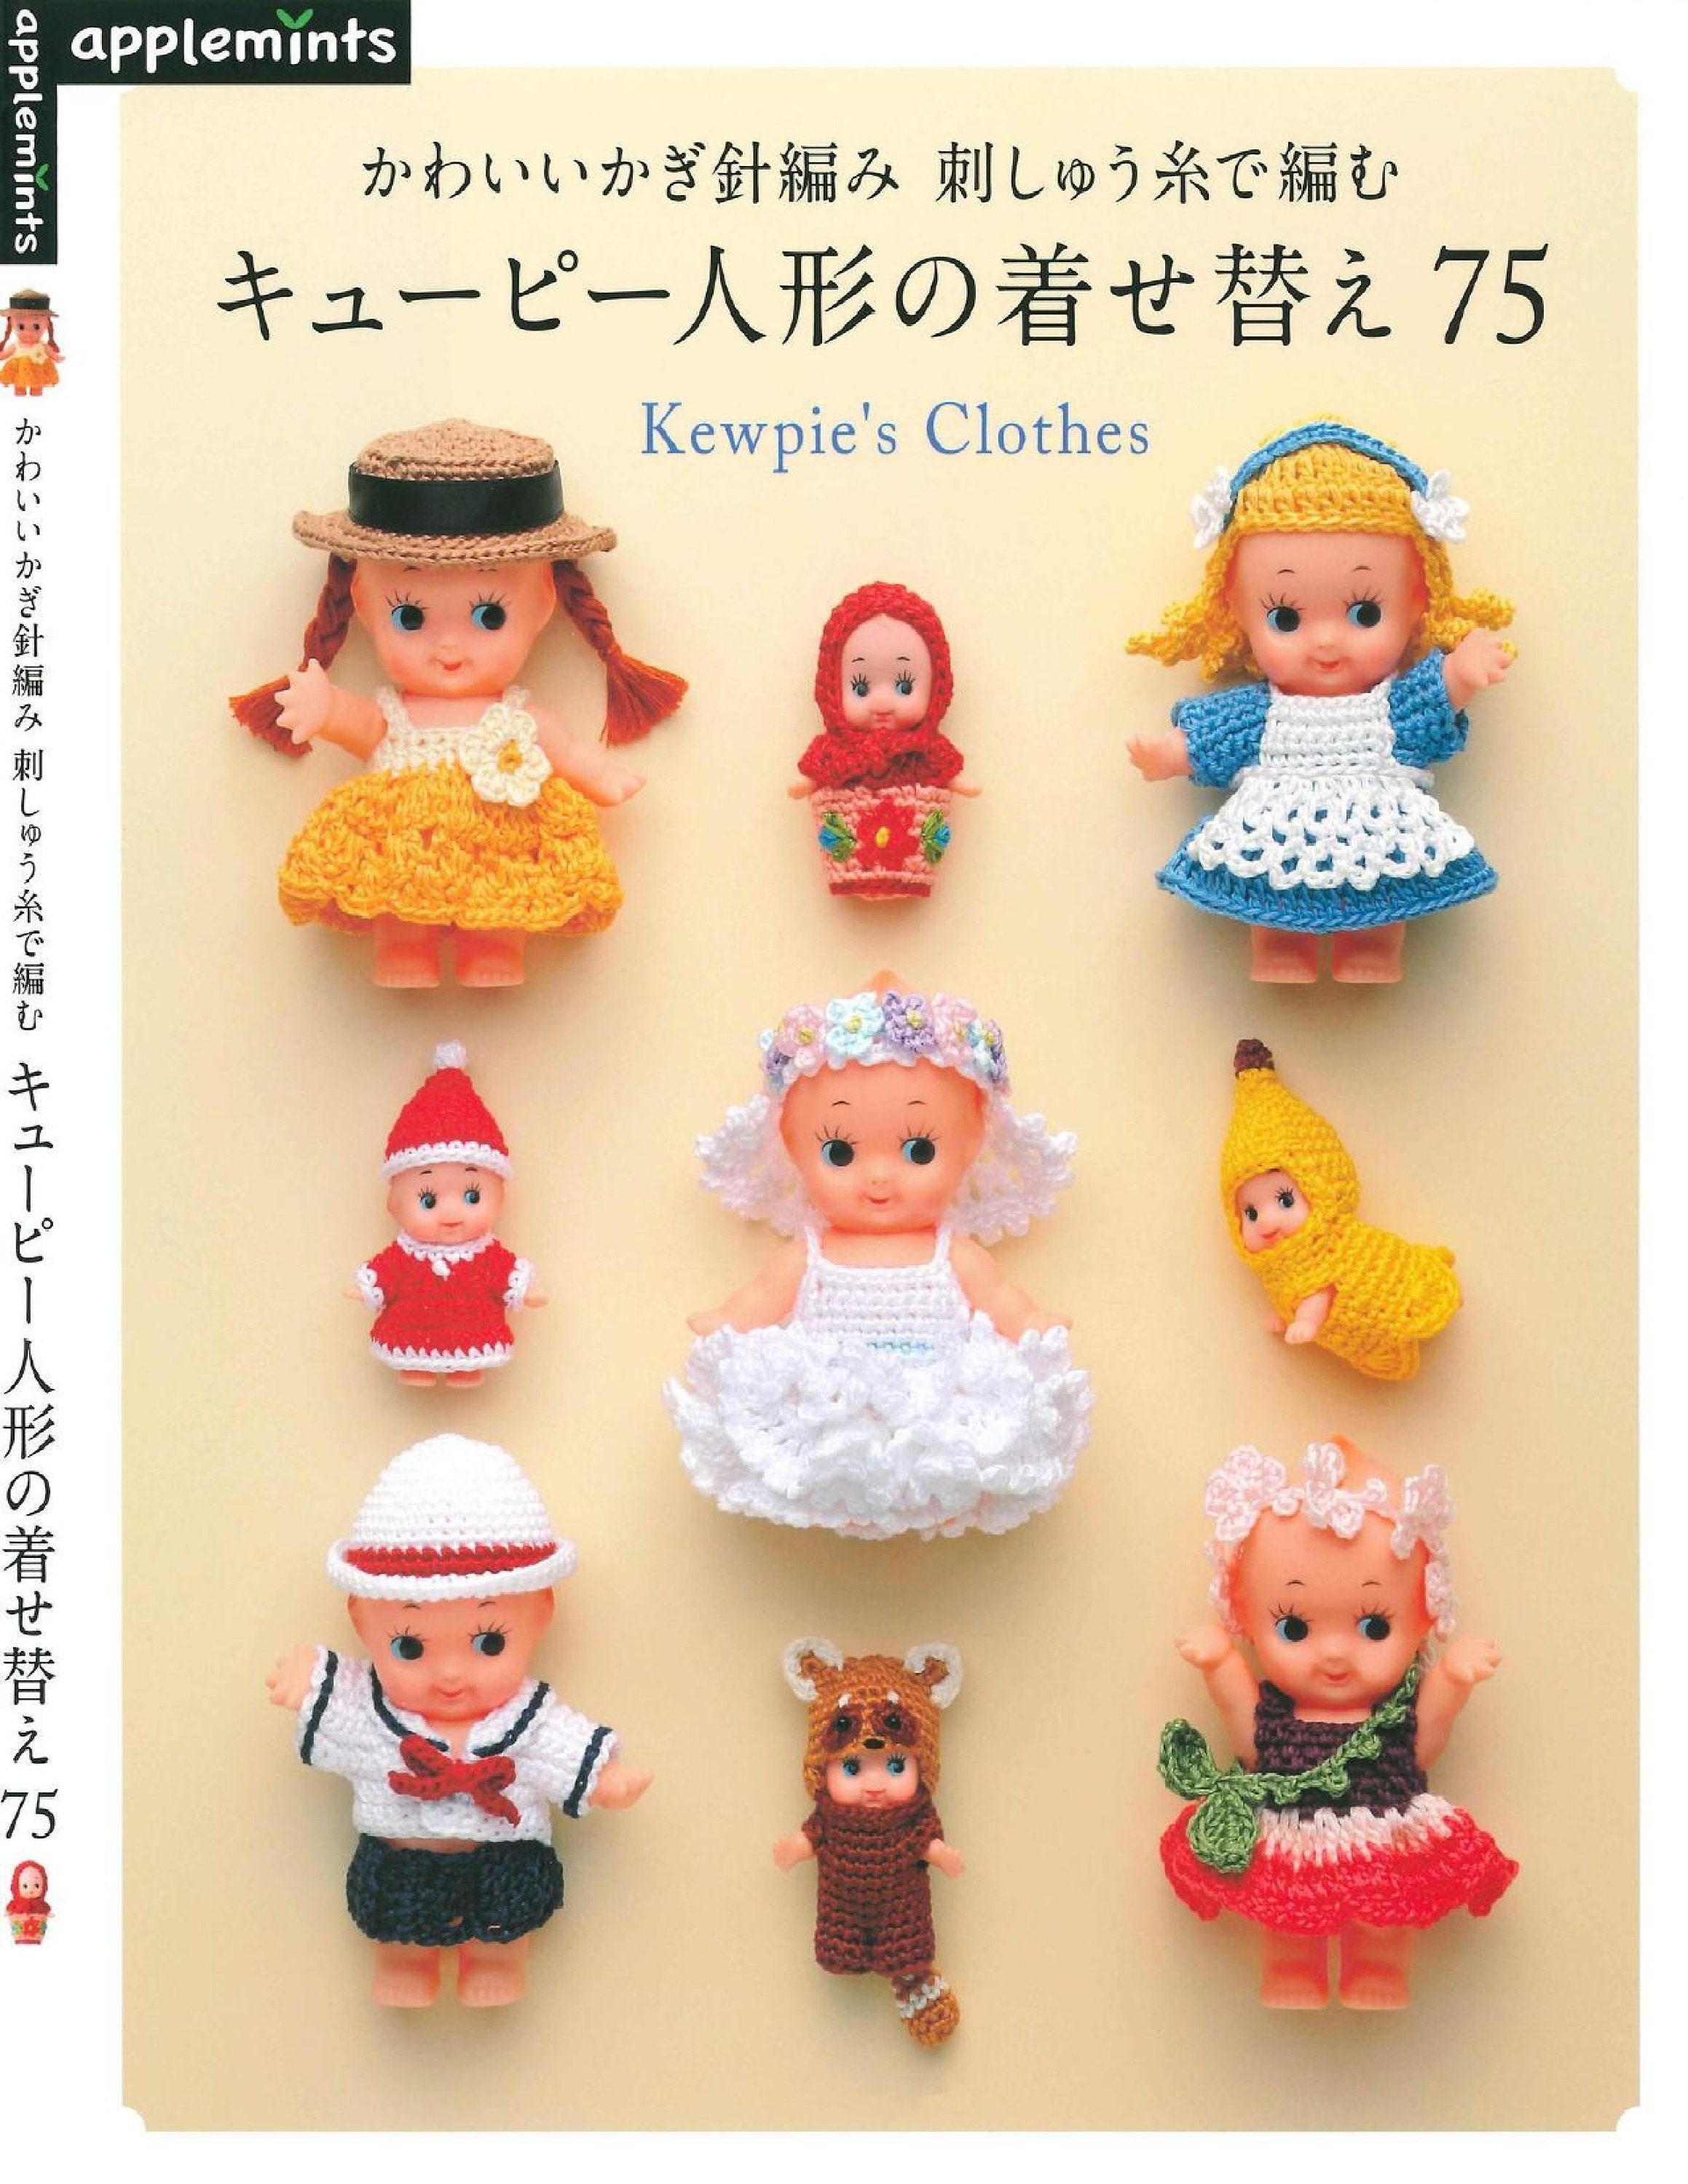 Crochet Dress-up Amigurumi Doll /Japanese Knitting Craft Book Brand New!